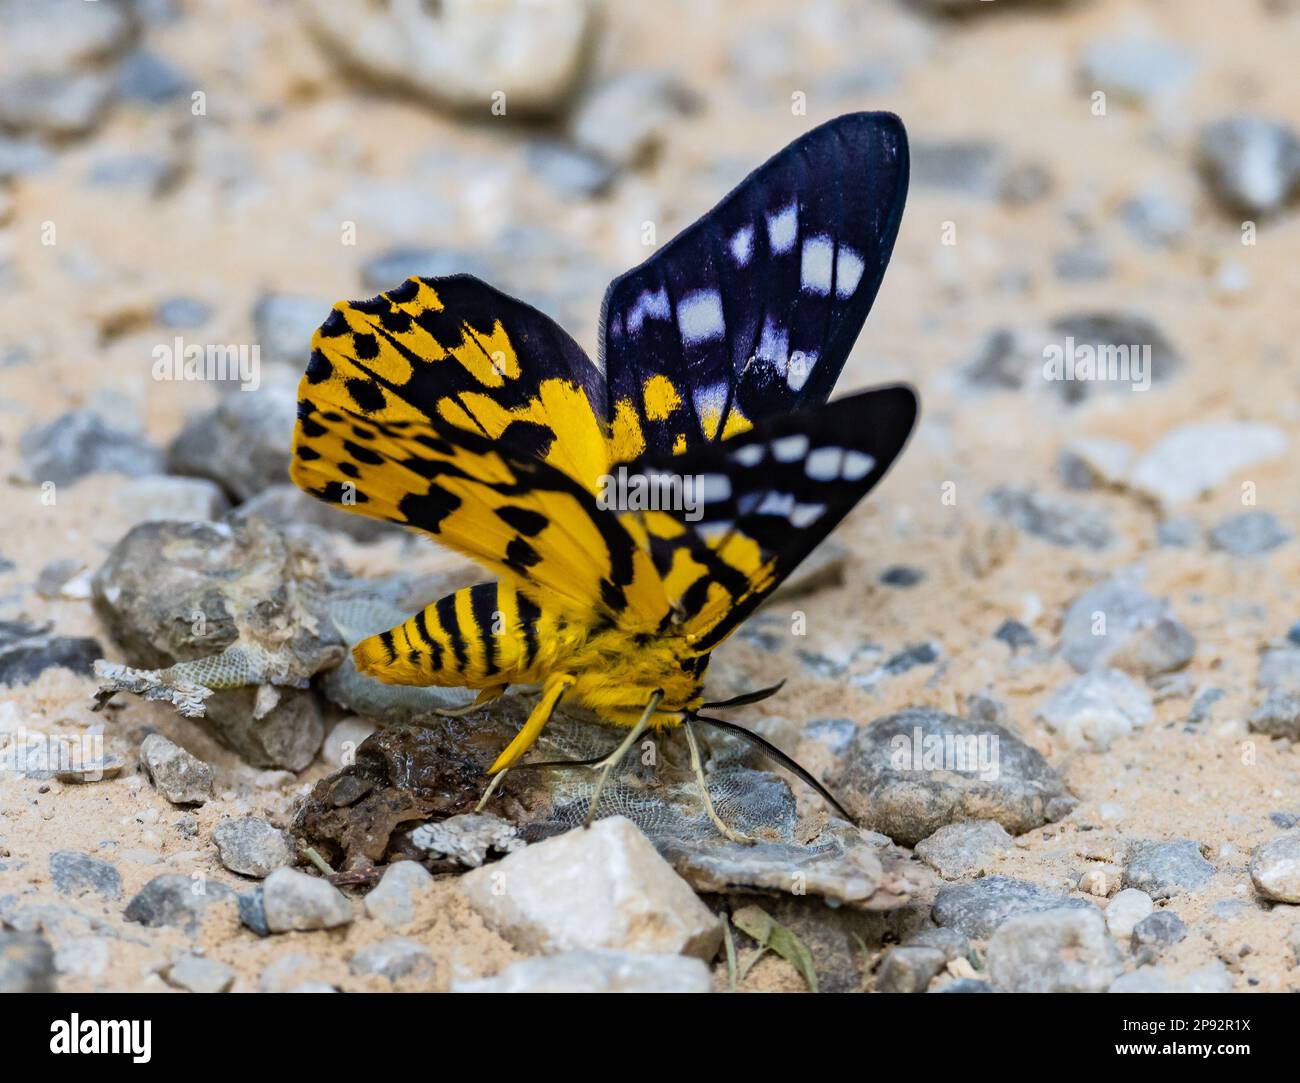 A bright colored False Tiger moth (Dysphania subrepleta) feeding on ground. Thailand. Stock Photo